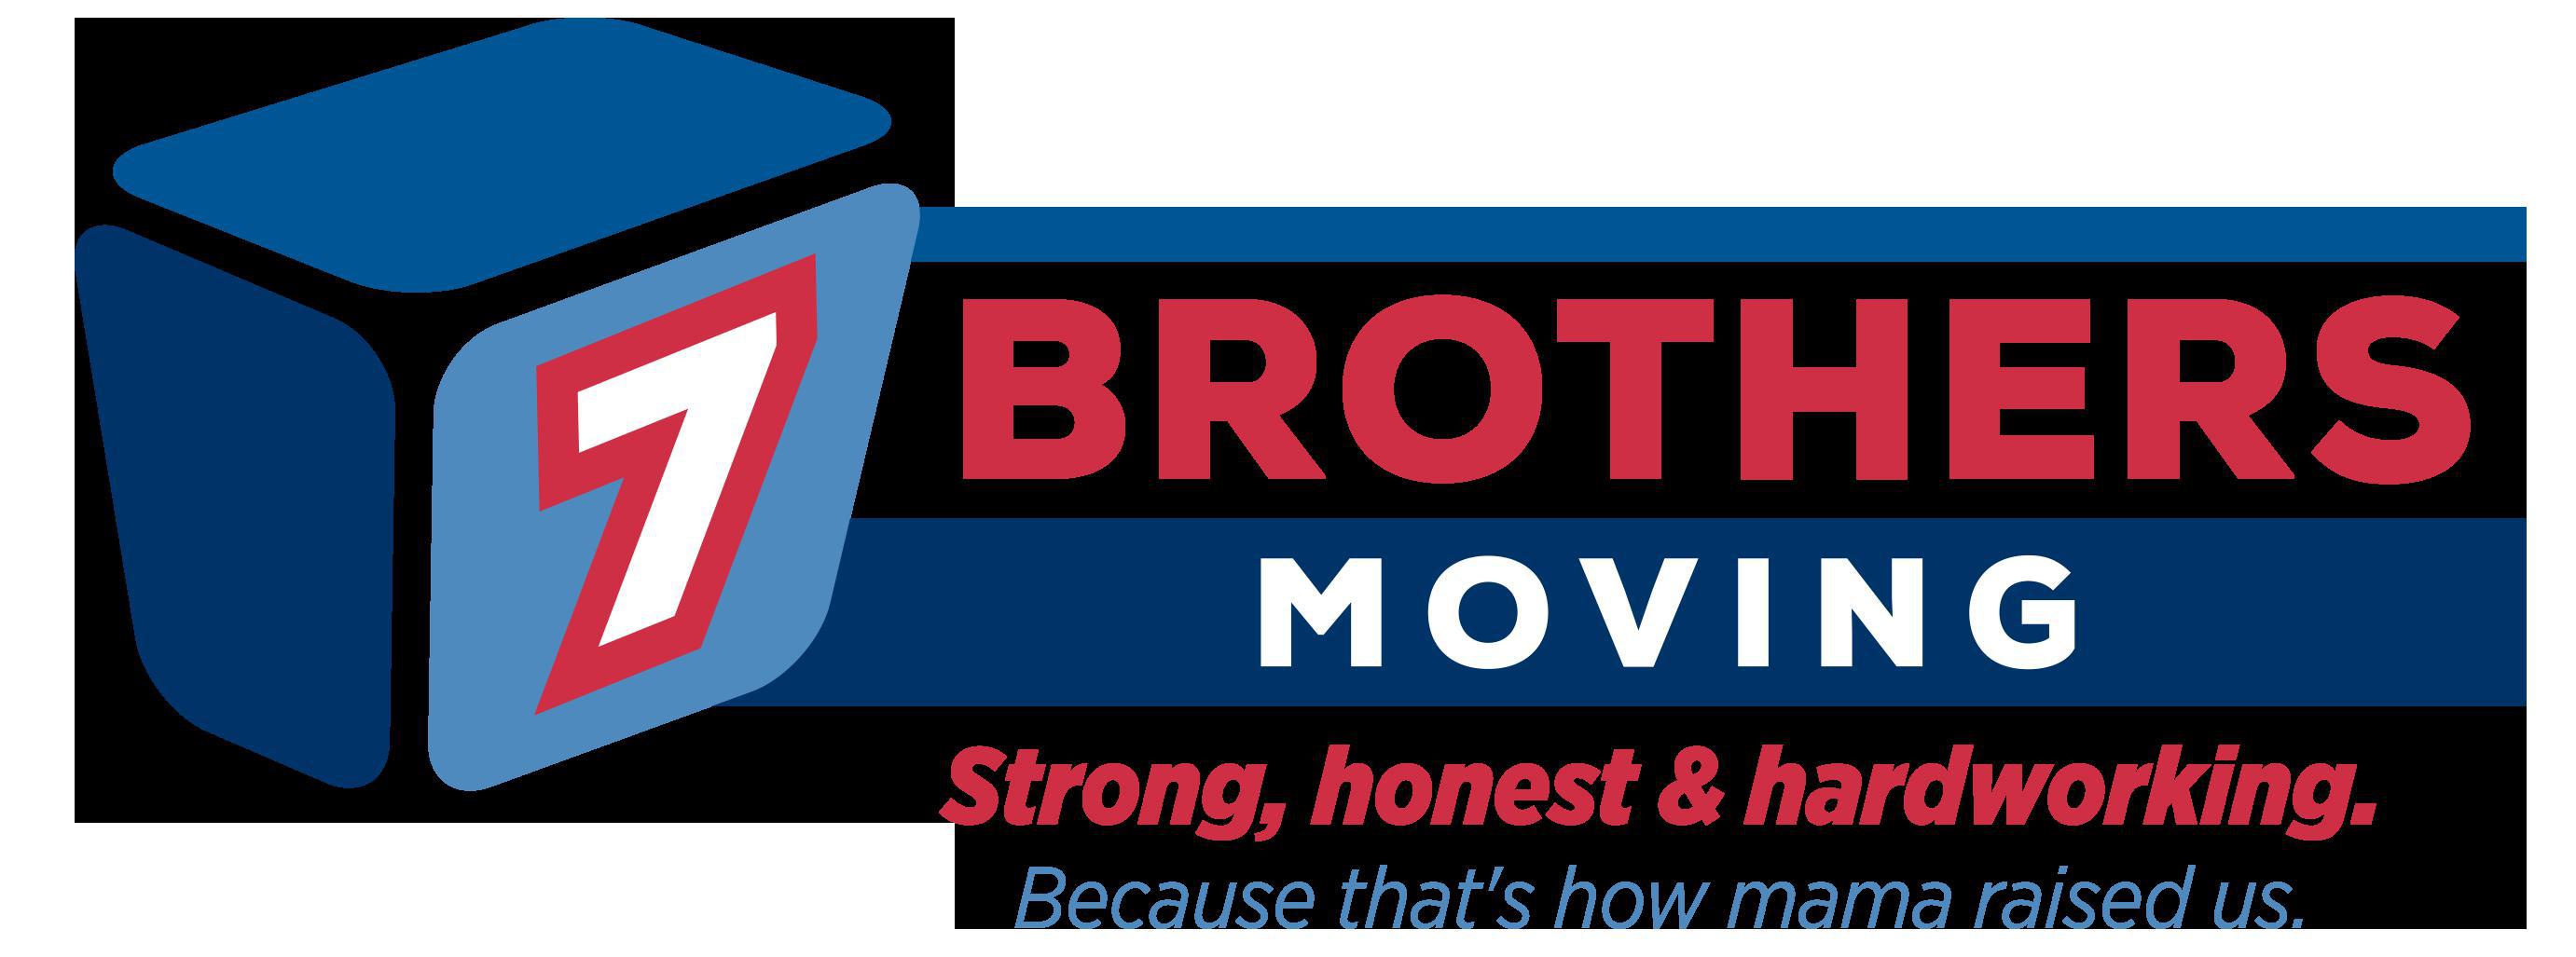 7 Brothers Moving Company logo 1